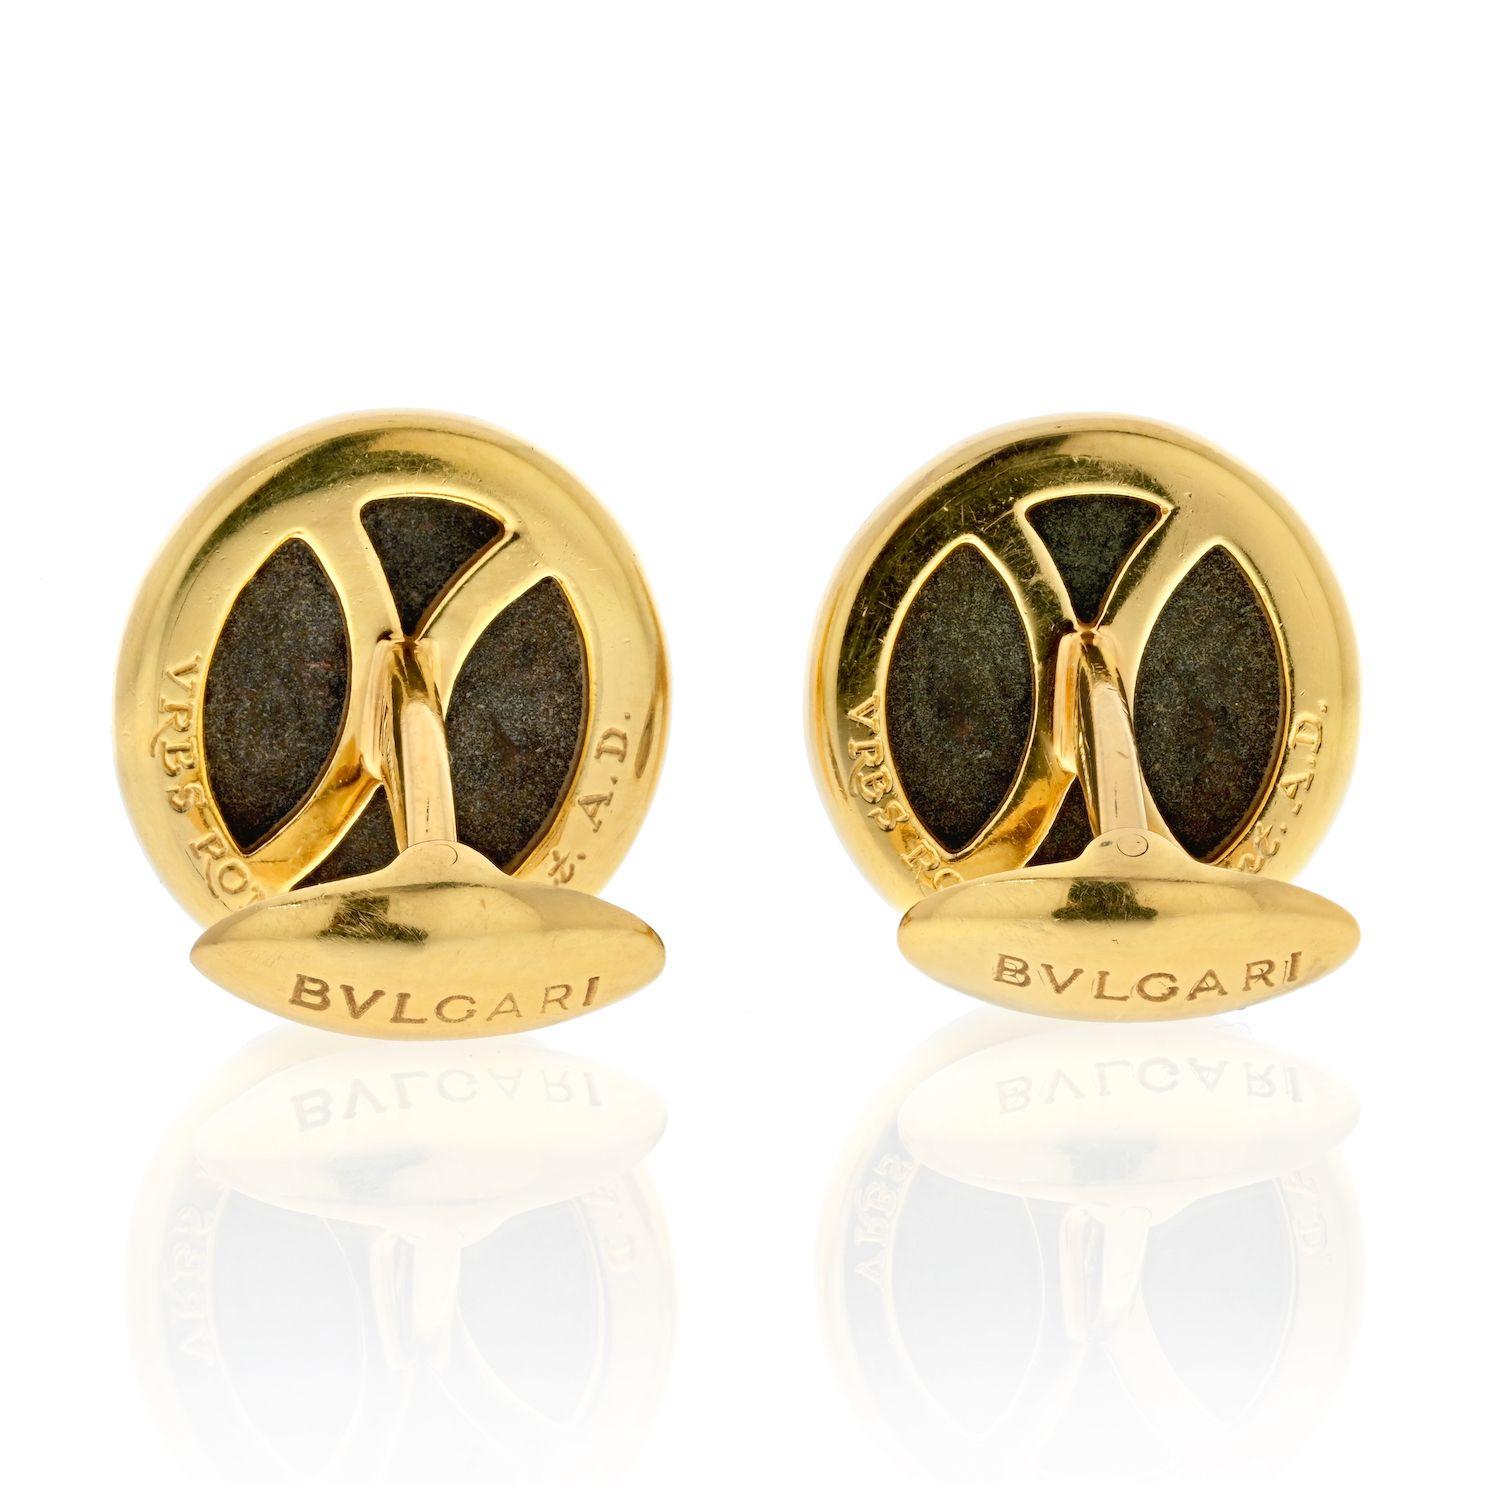 Modern Bvlgari 18k Yellow Gold Coin Cufflinks